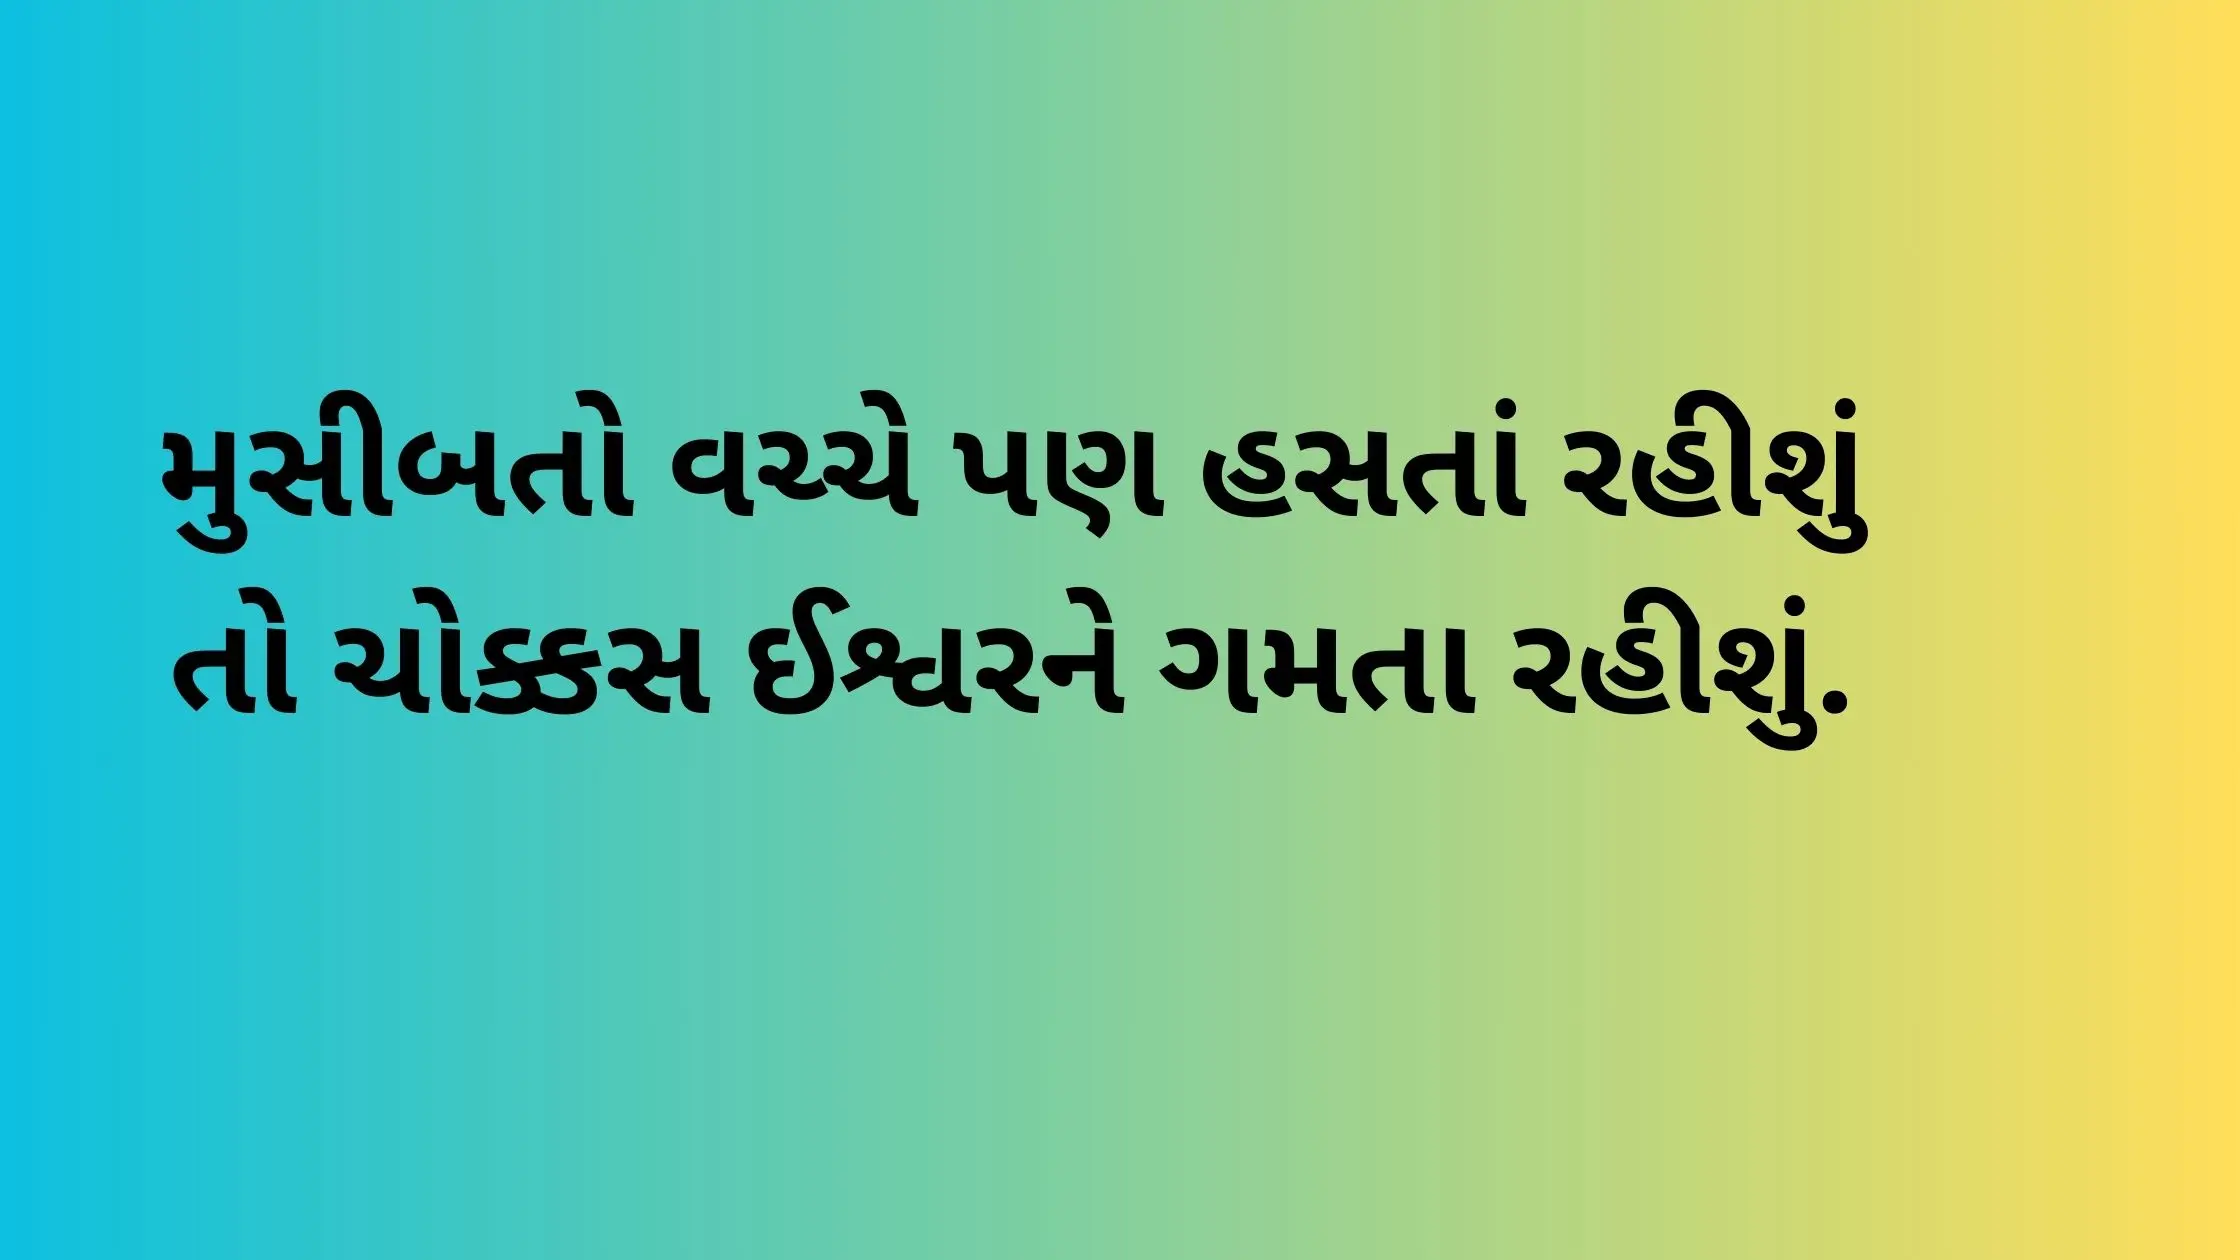 Suvichar Gujarati Status with Images